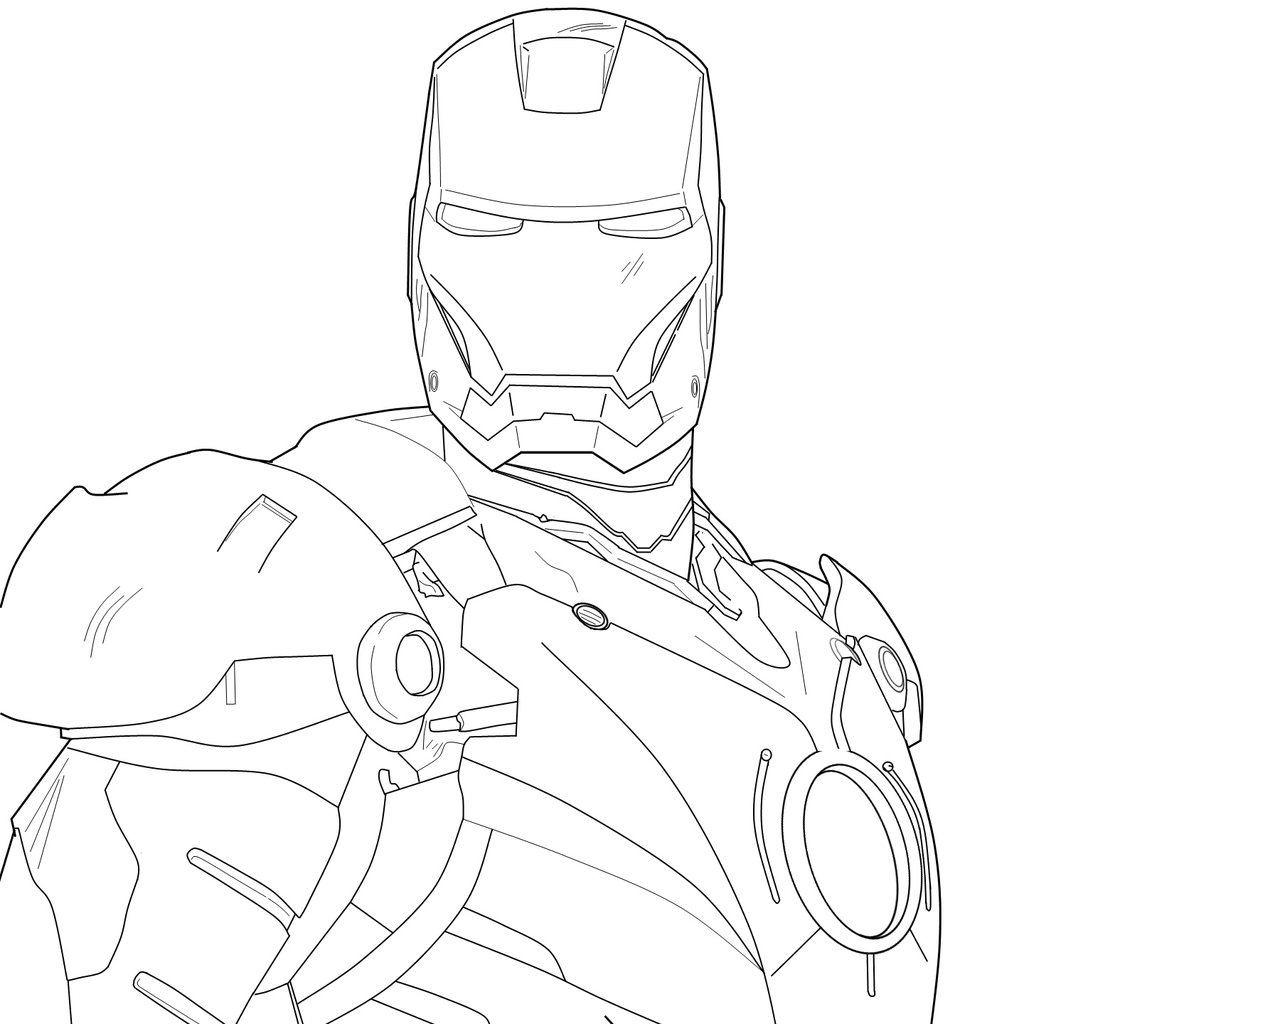 DeviantArt: More Artists Like Iron Man [Line Drawing] by TehDrummerer